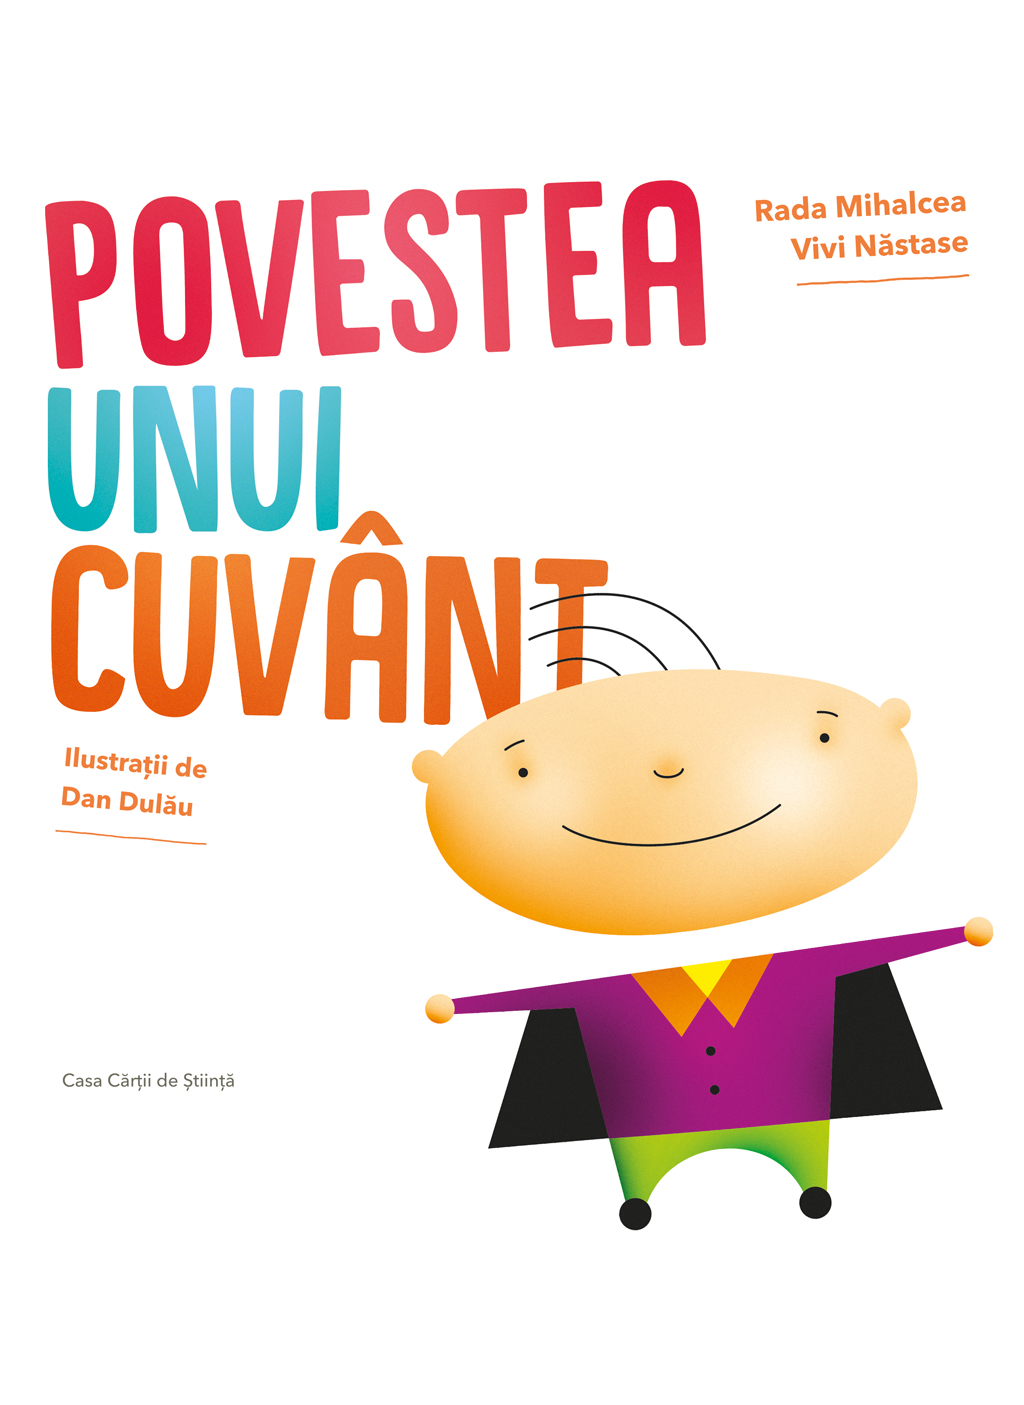 Povestea unui cuvant | Rada Mihalcea, Vivi Nastase carturesti.ro poza bestsellers.ro